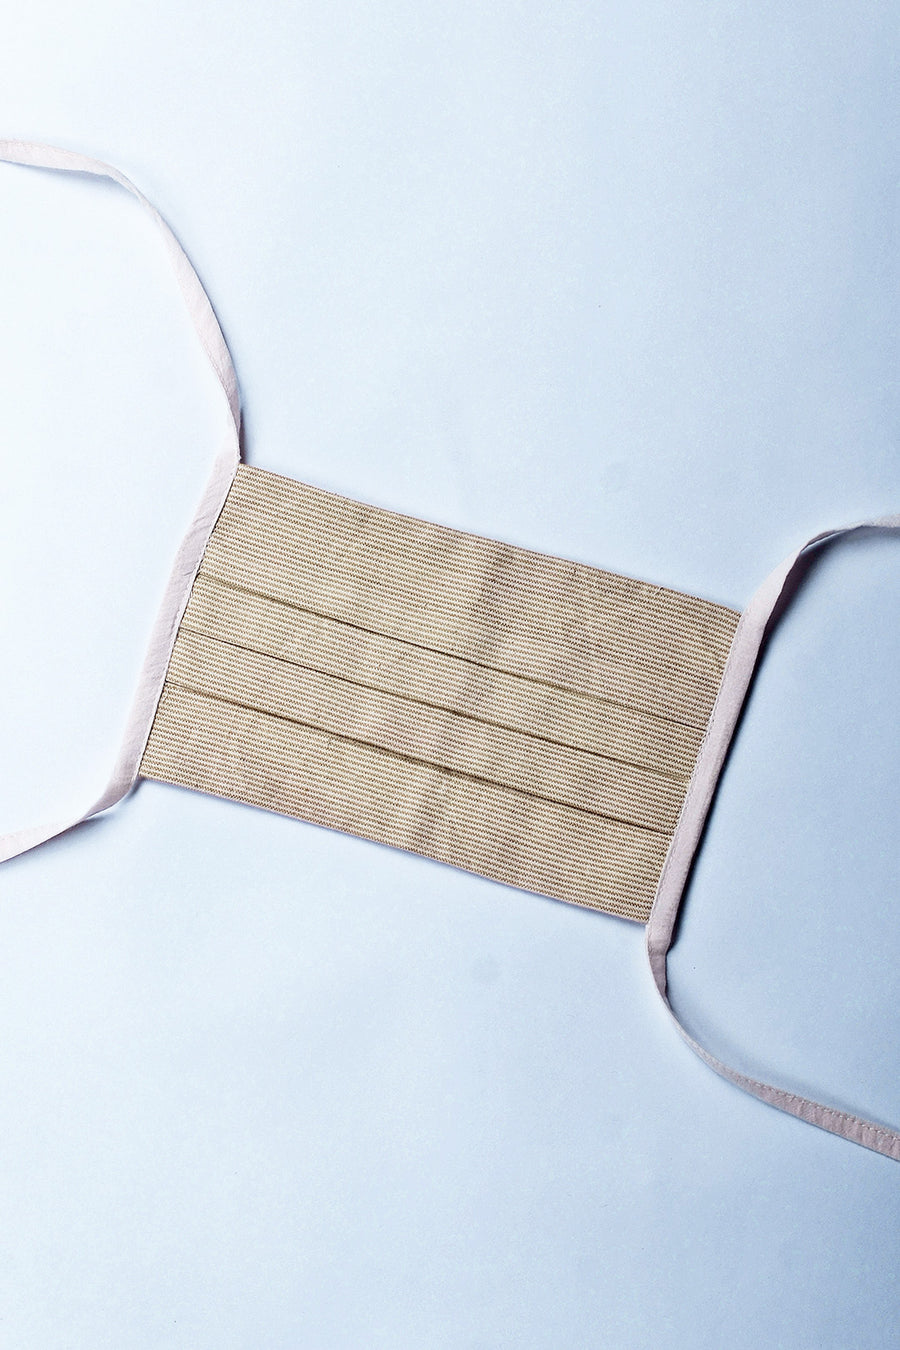 Neem Organic Cotton Striped mask with rope (RS 100 each) - Upasana Design Studio